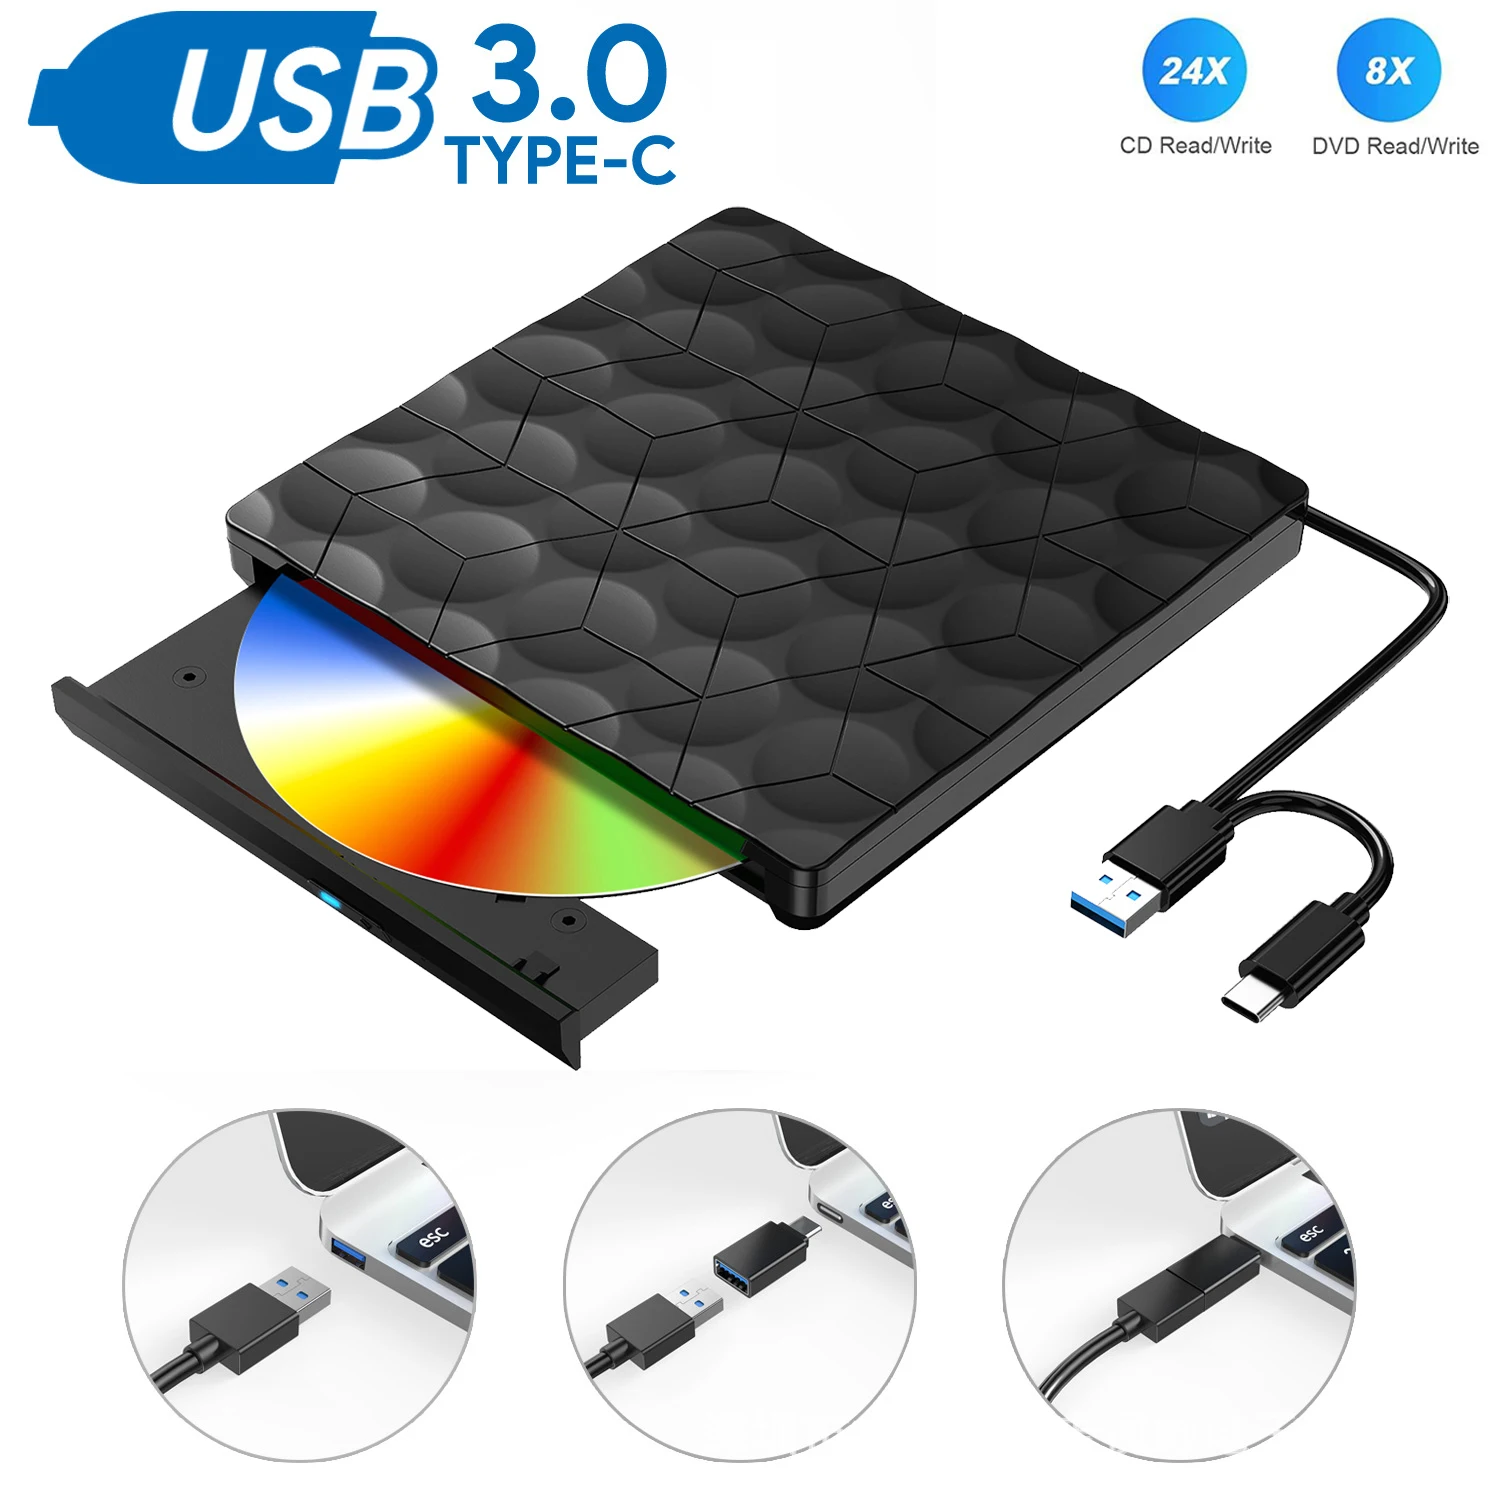 

External DVD Player USB3.0 Type-C CD DVD Burner and Reader for Laptop Desktop PC Mac Windows Linux iOS Media Player